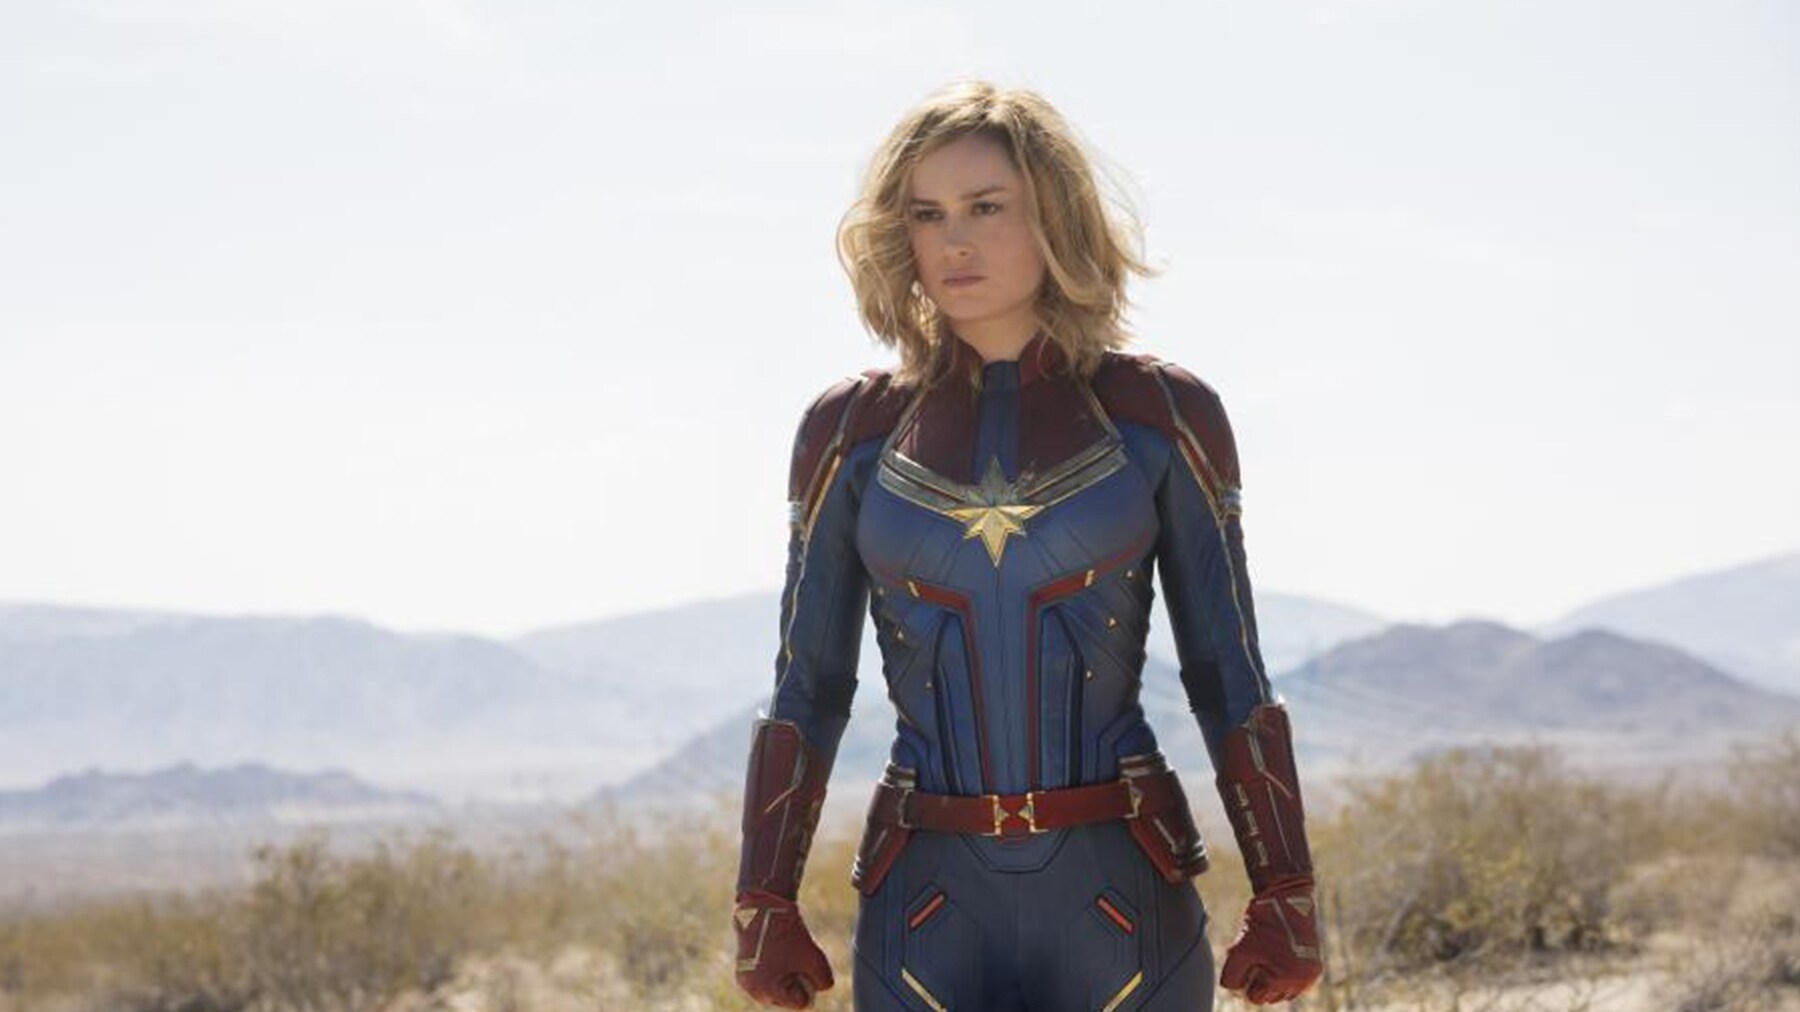 Brie Larson Didn't Feel Nervous on the Set of Captain Marvel